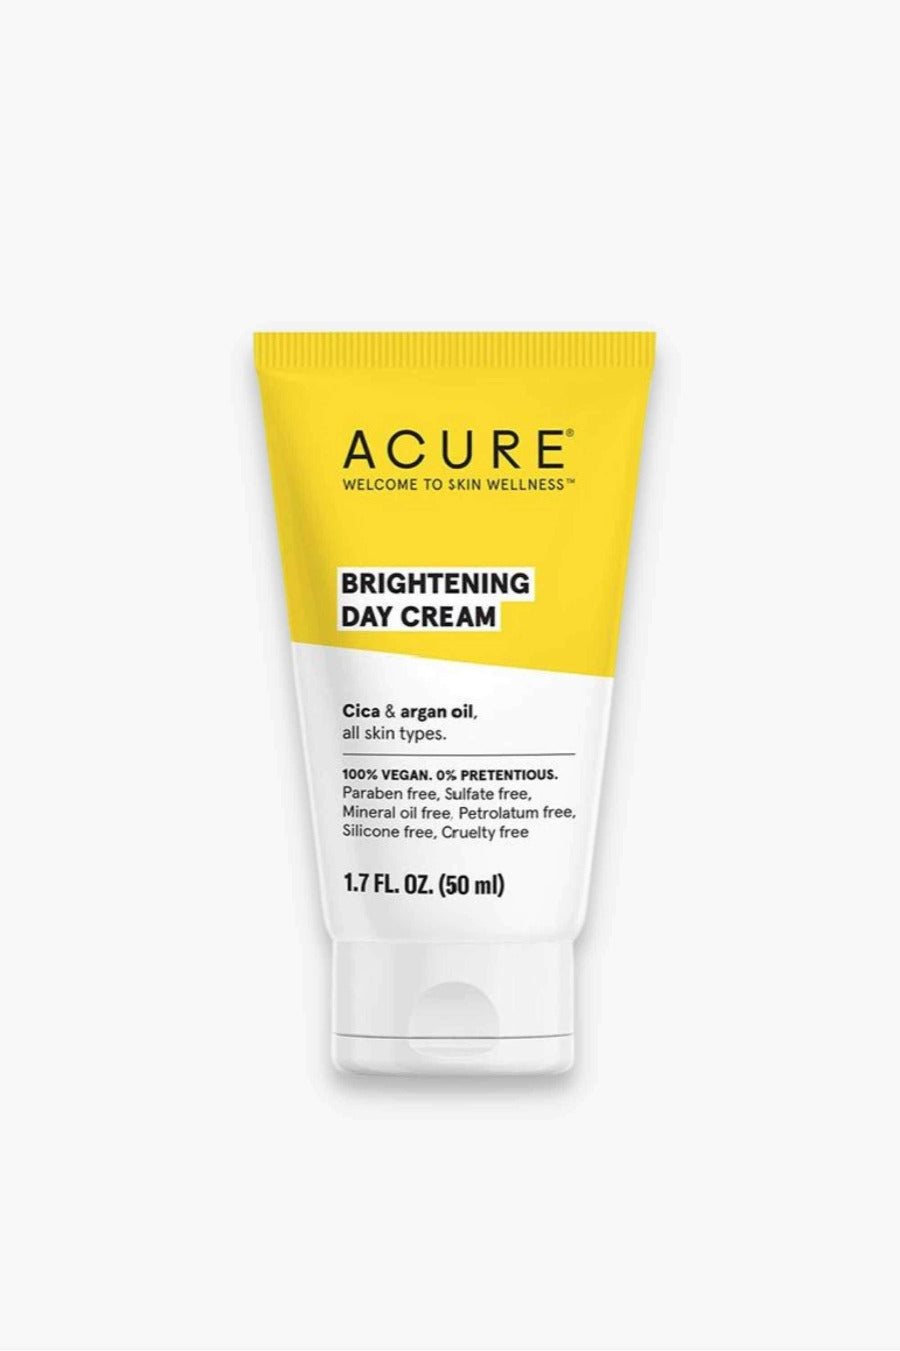 Acure brightening day cream Australian skincare store moisturiser Vegan